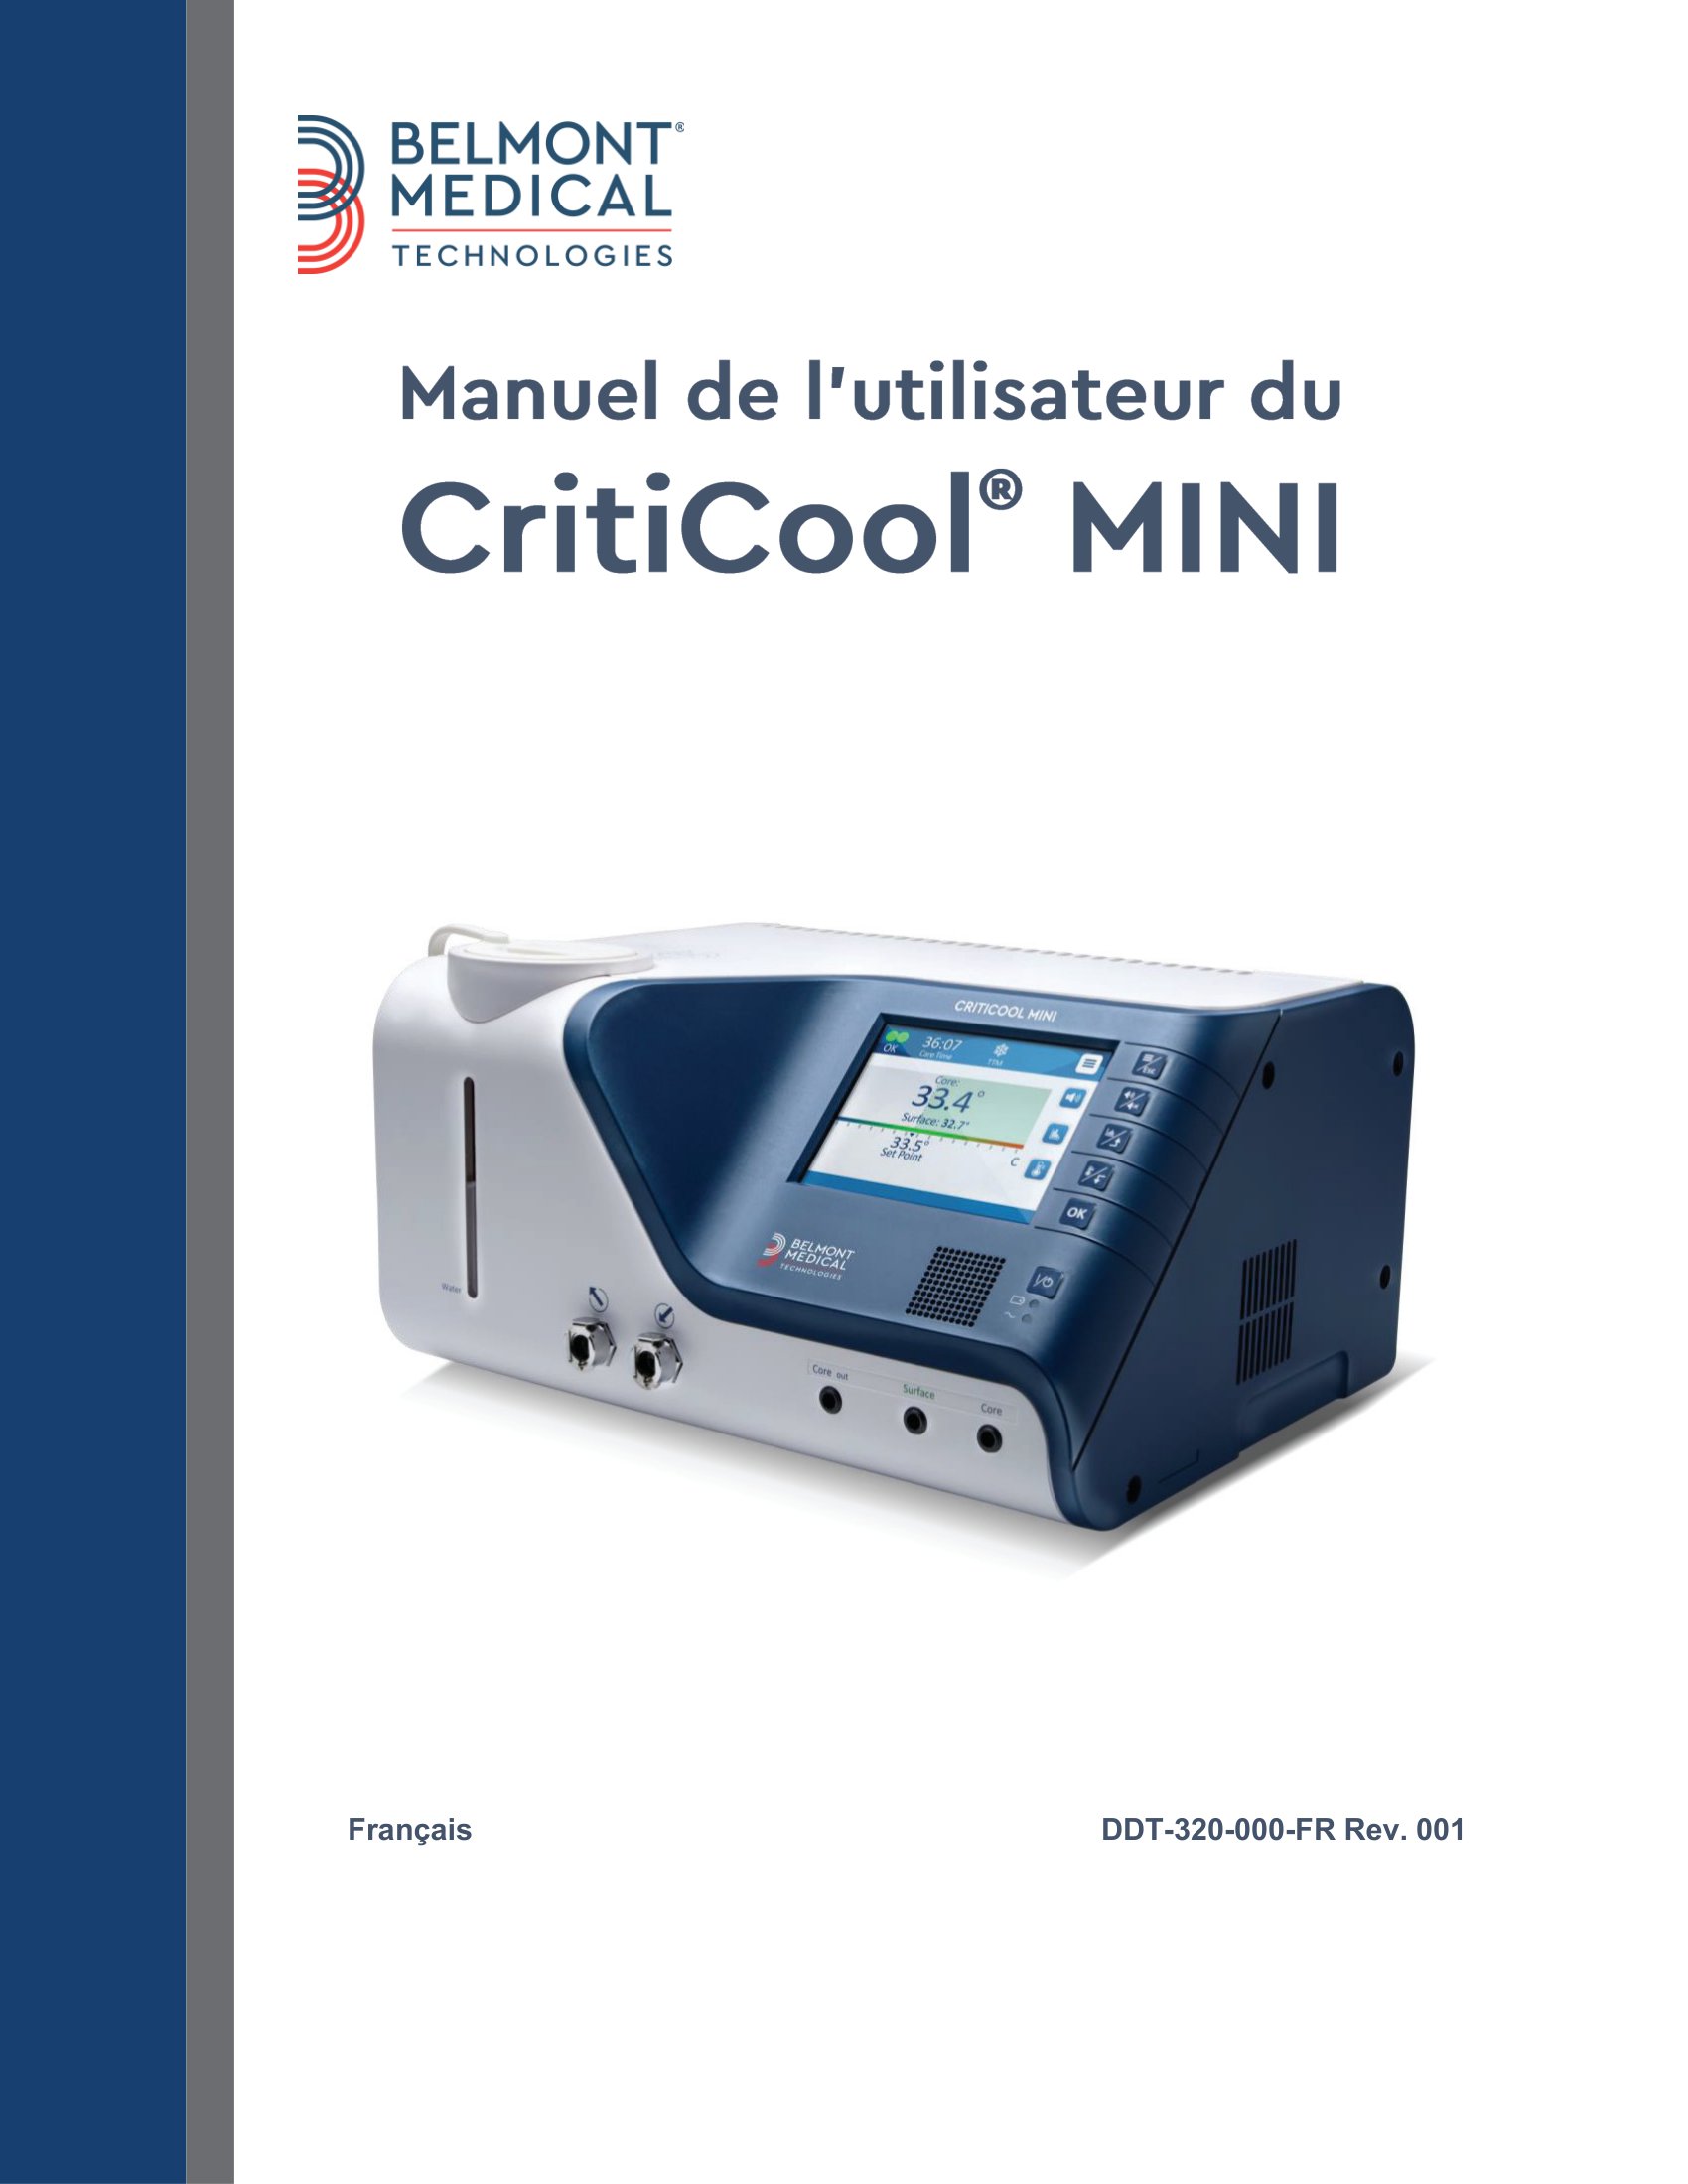 CritiCool MINI v2.0 User Manual (French)